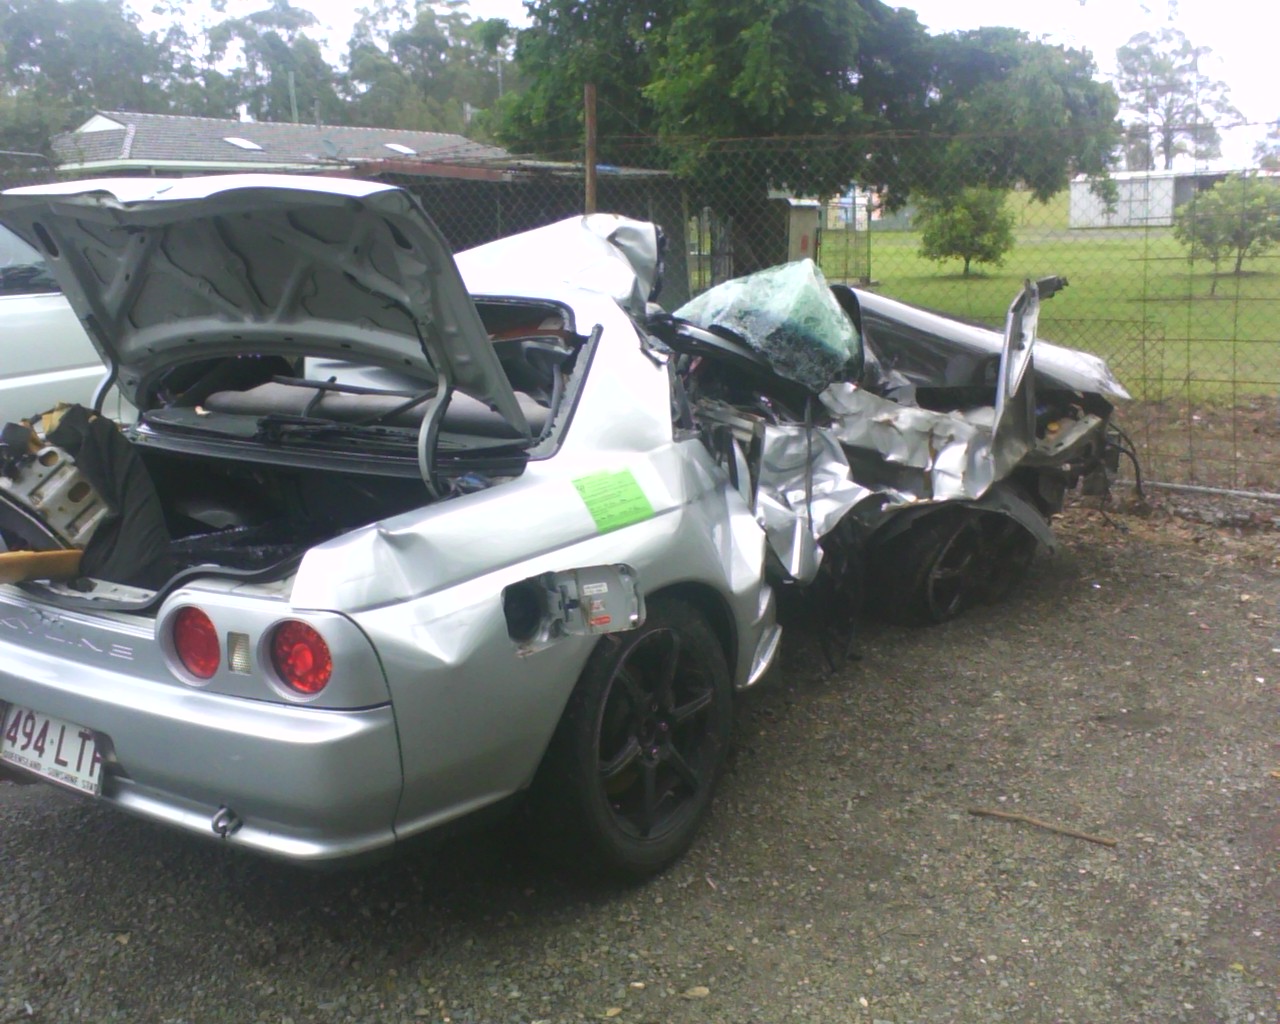 Nissan GTR 32 crash